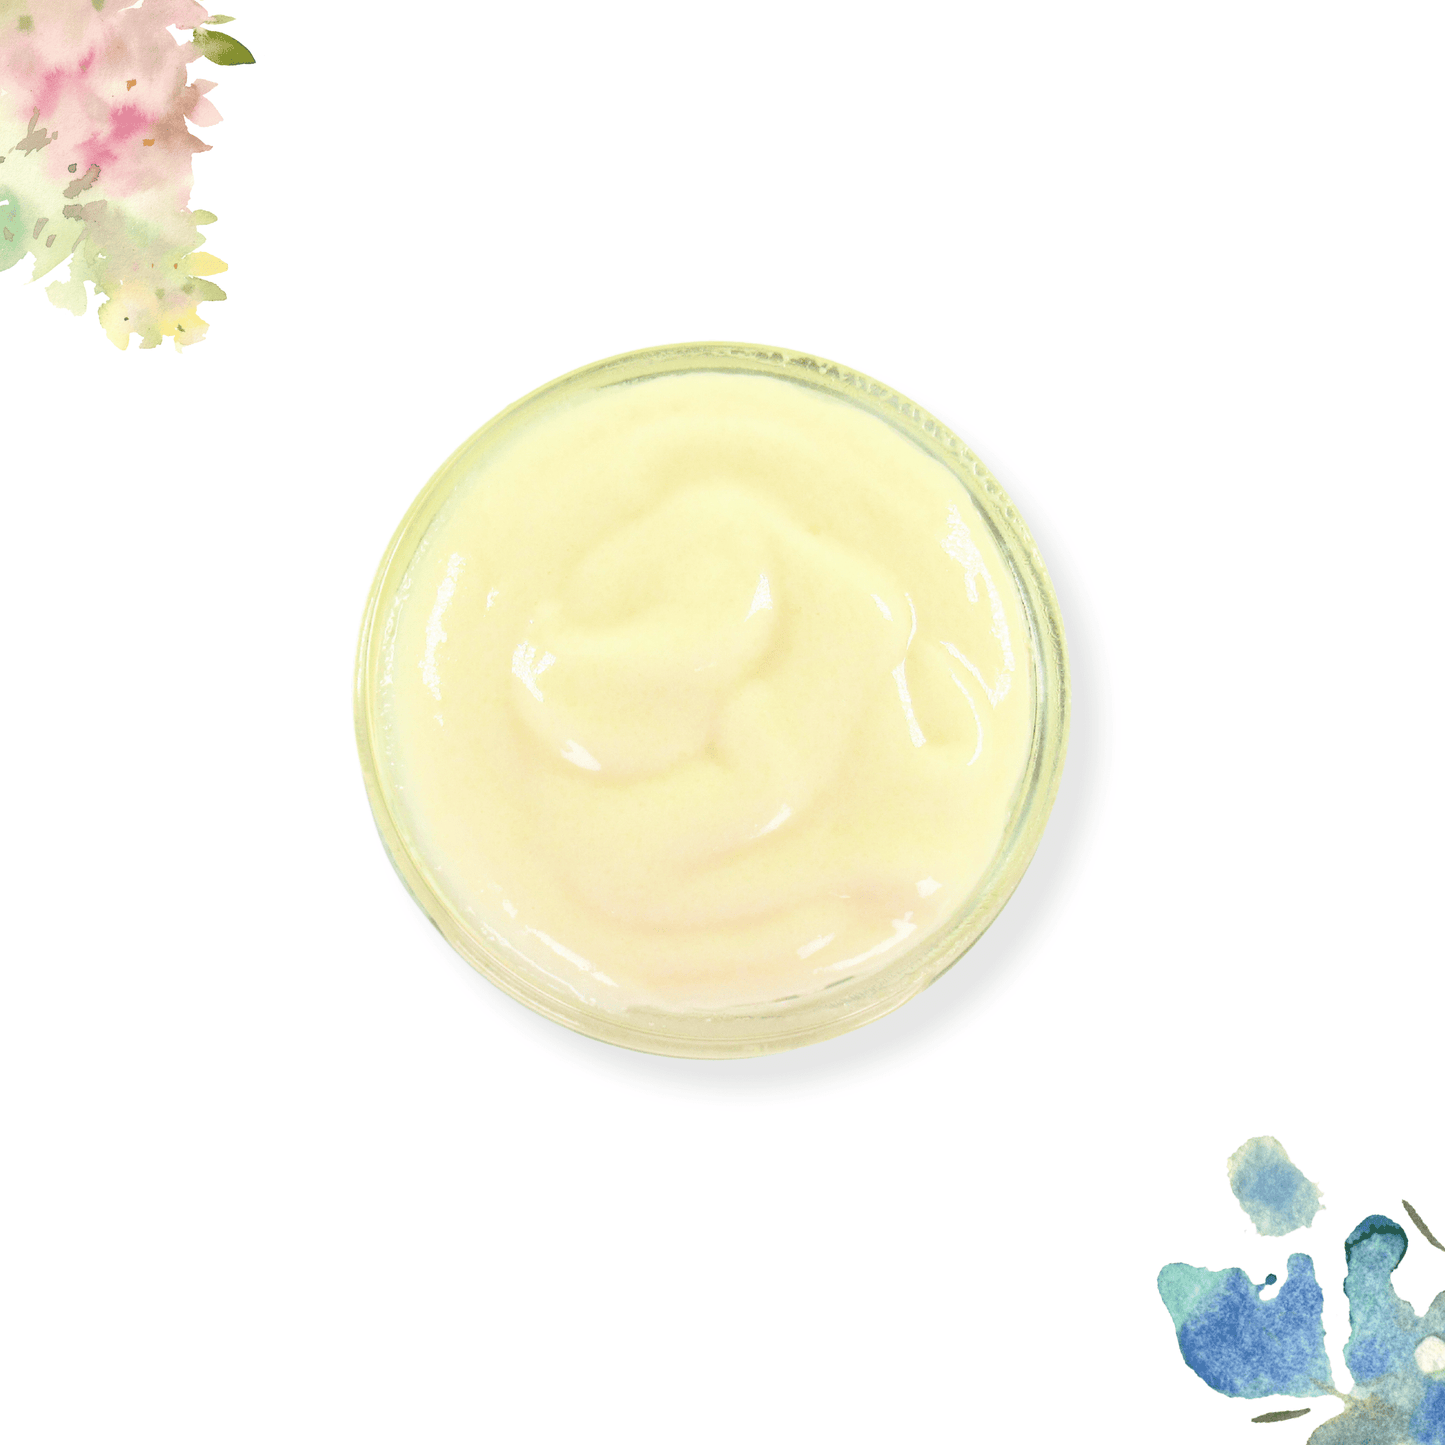 Brightening Cream ৹ Discoloration Correction